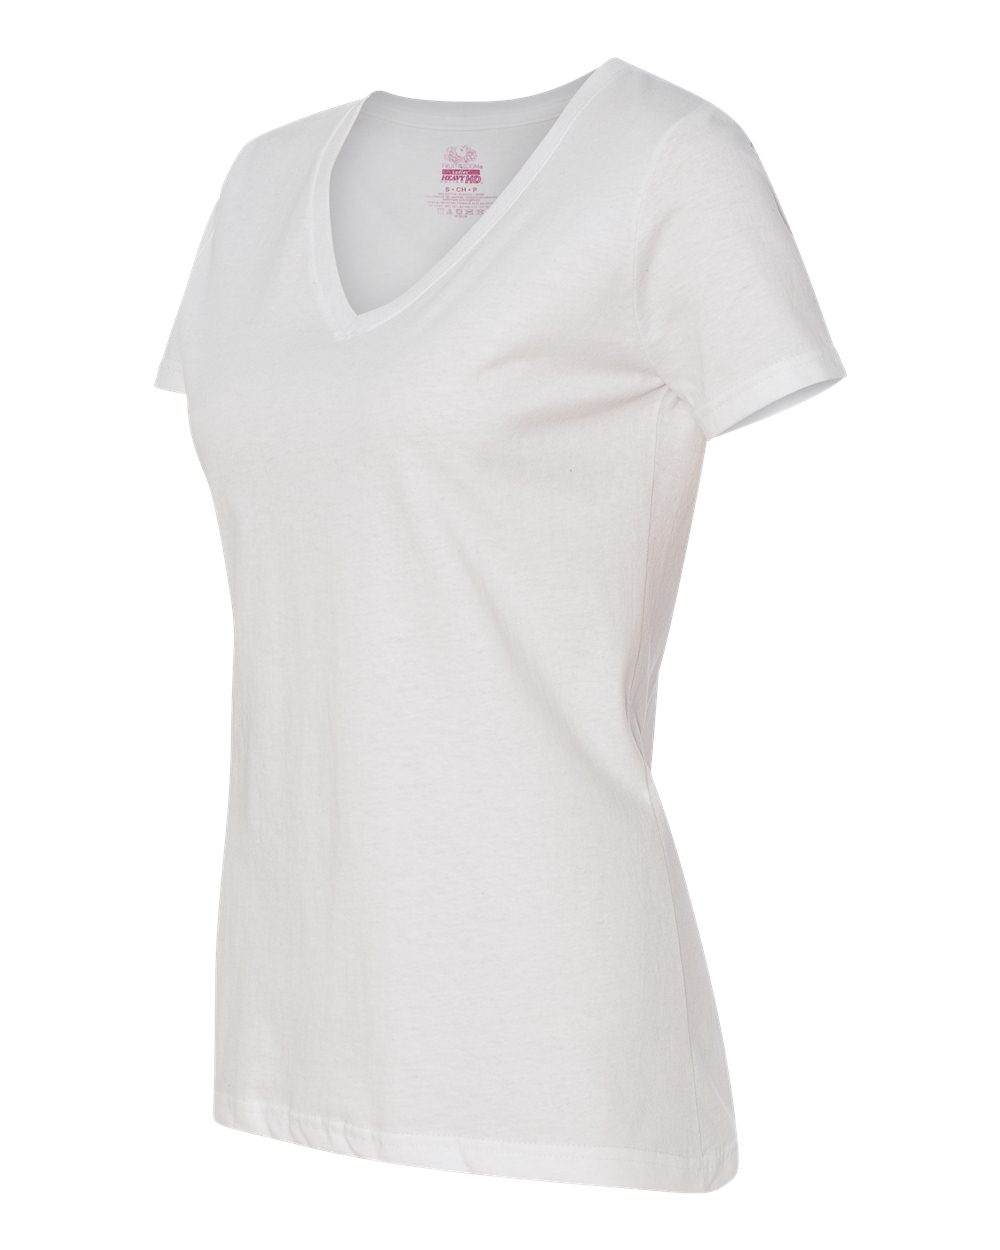 Style # L39VR - Original Label Fruit of the Loom Ladies 5 Oz HD Cotton V-Neck T-Shirt White S -